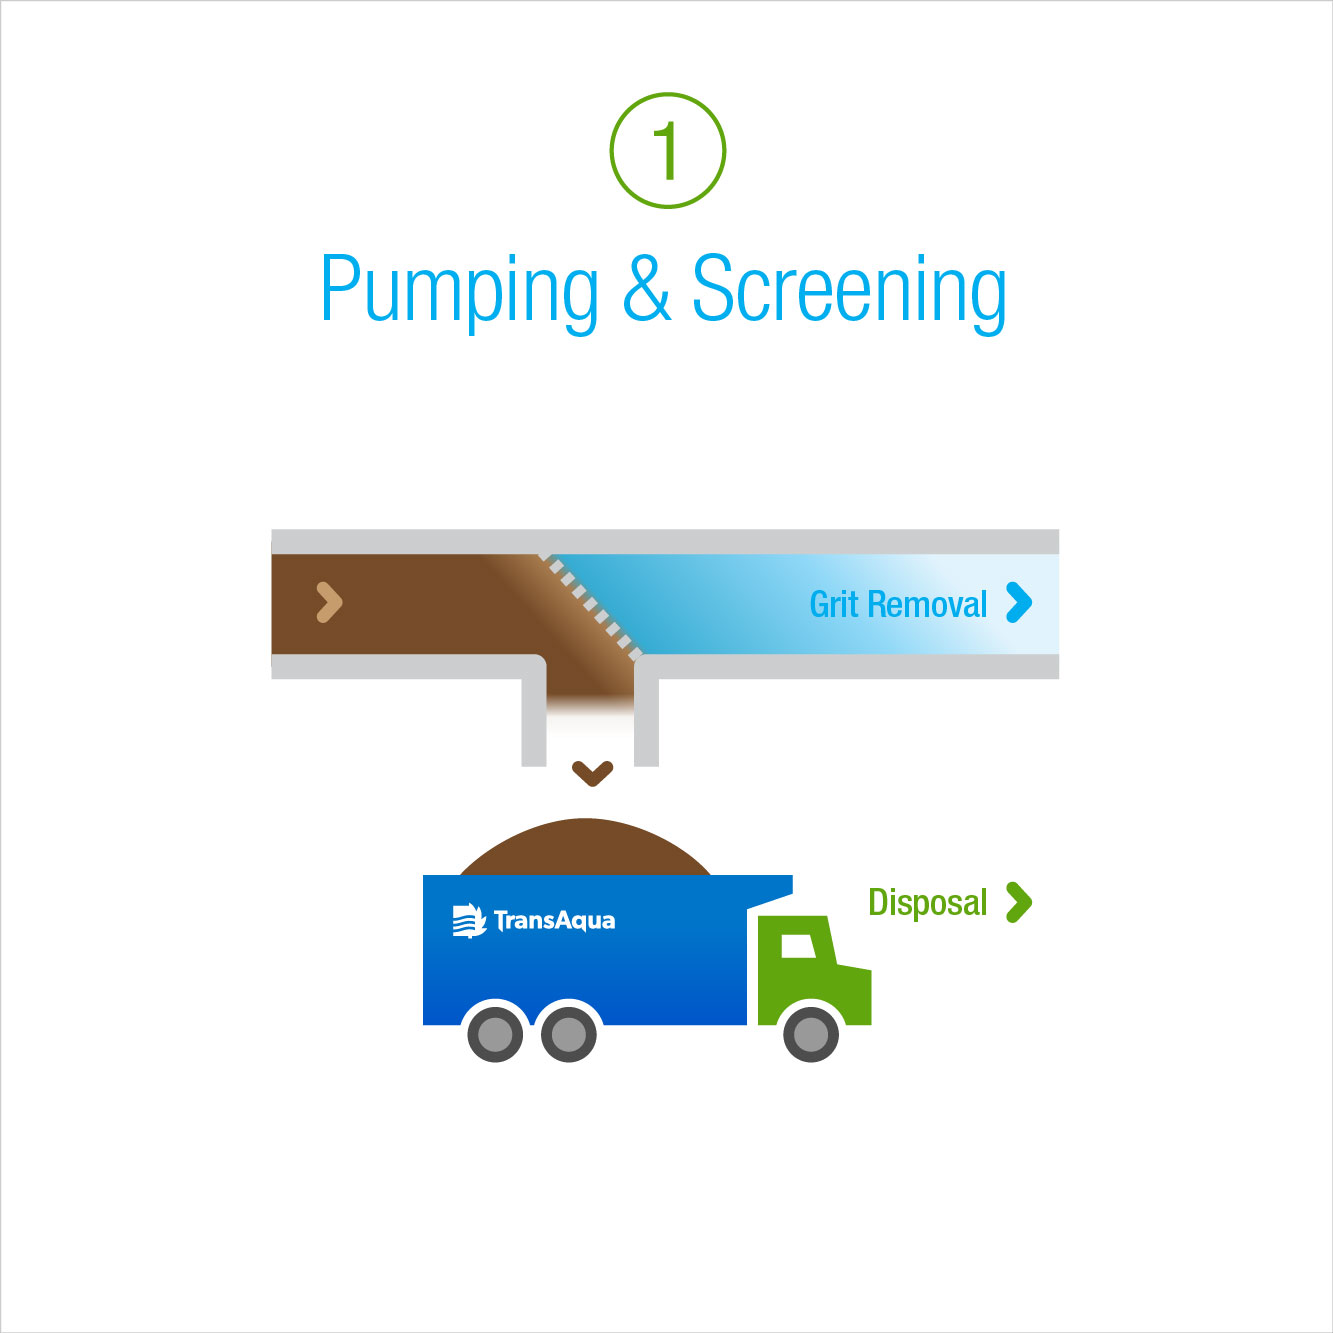 1: Pumping & Screening